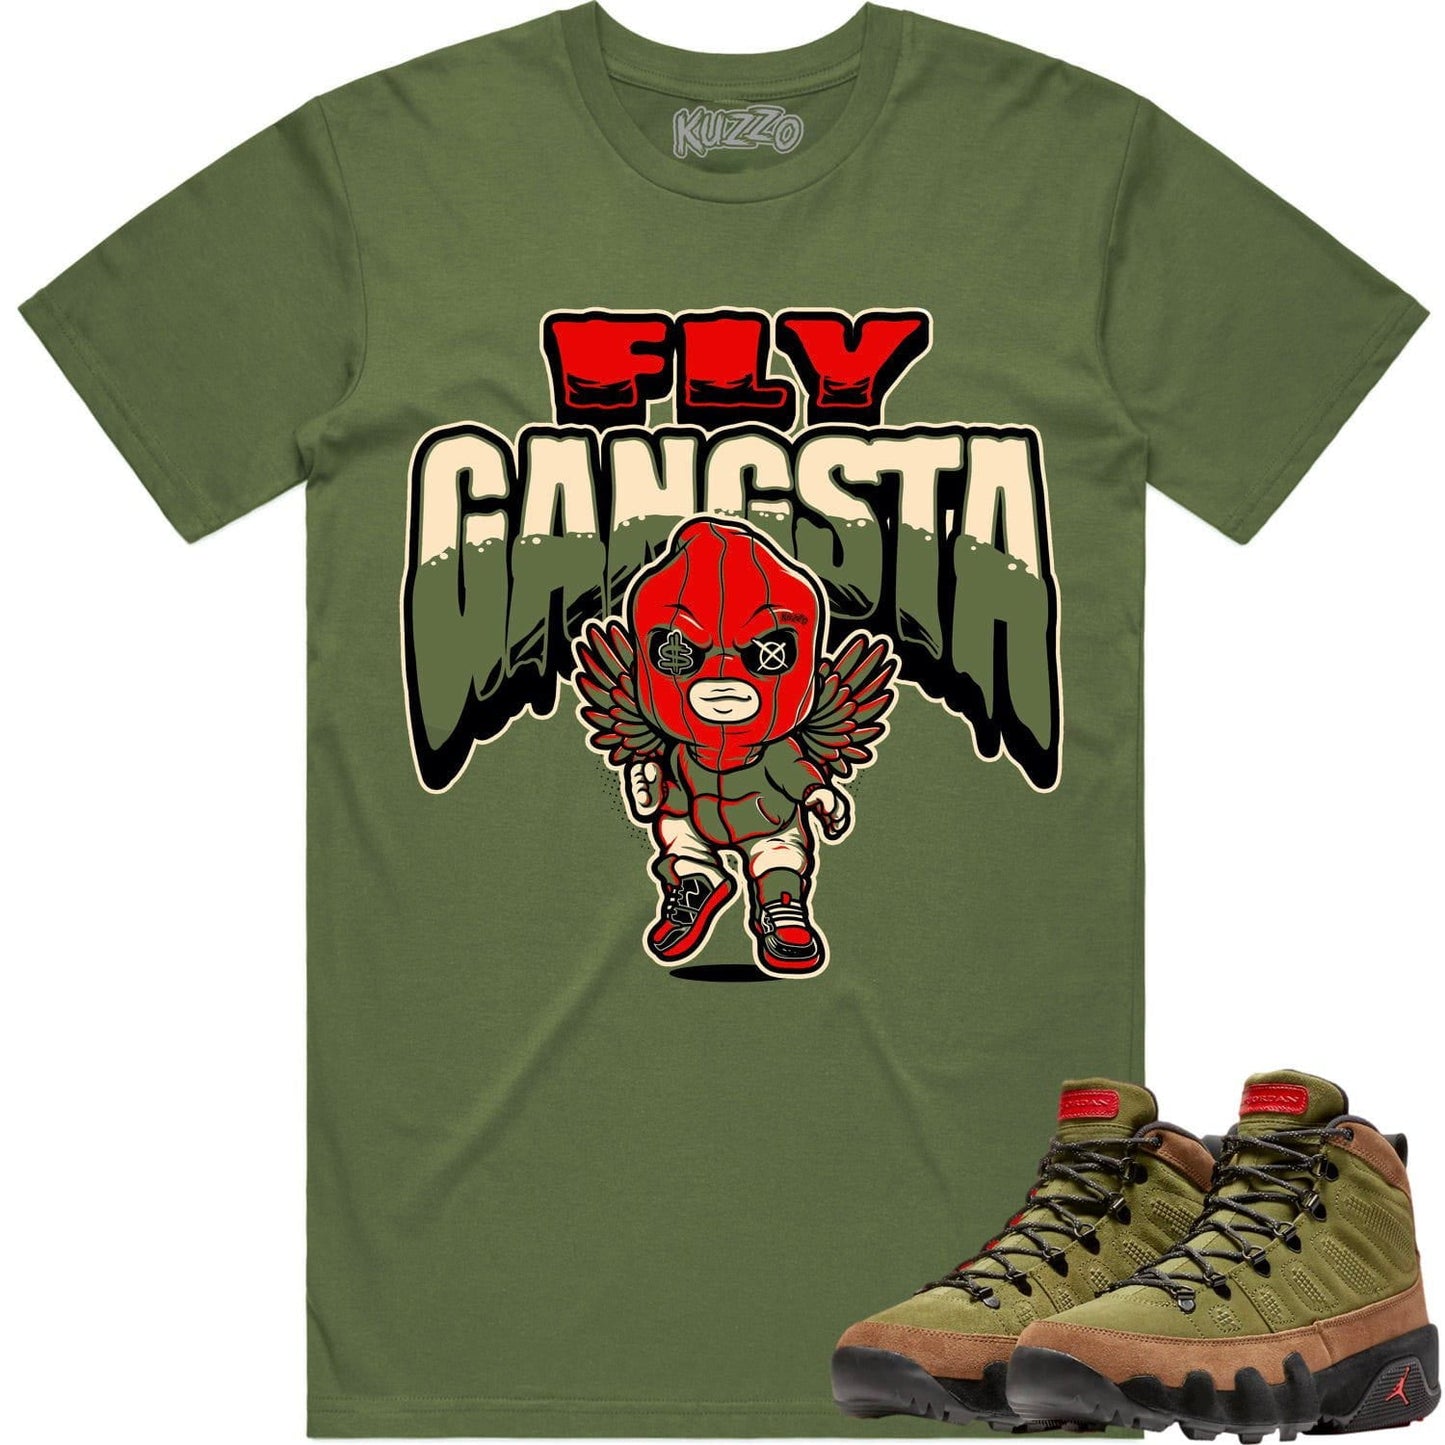 Beef Broccoli 9s Shirt - Jordan Retro 9 Beef Shirts - Fly Gangsta